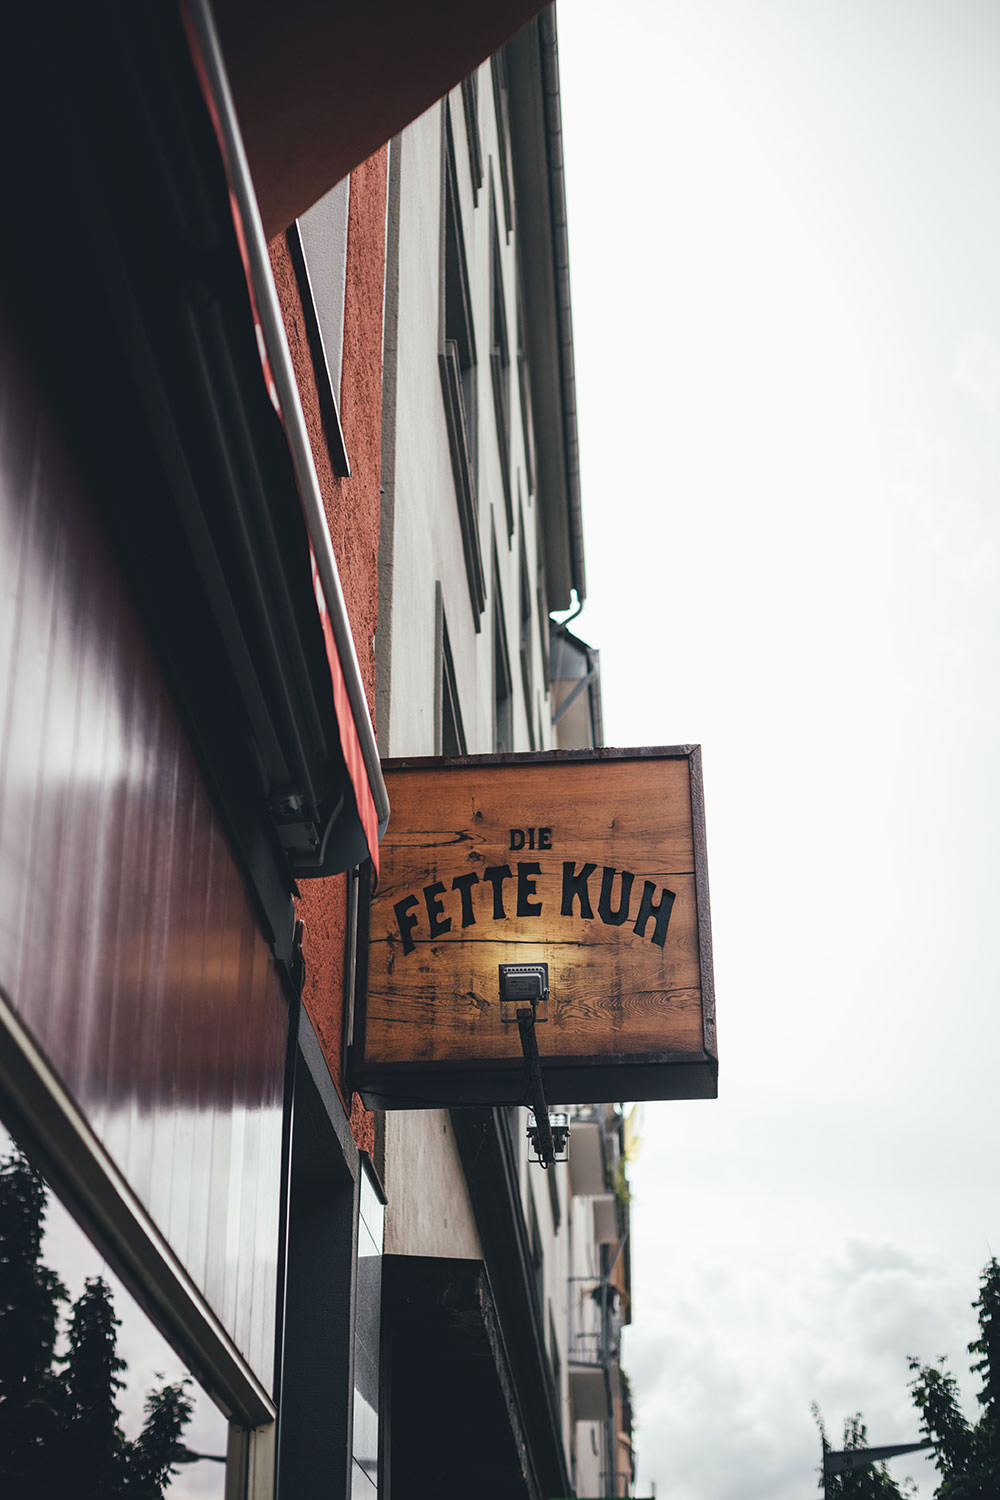 Die Fette Kuh Burgerladen in Köln | moeyskitchen.com #lieblingsladen #diefettekuh #koeln #suedstadt